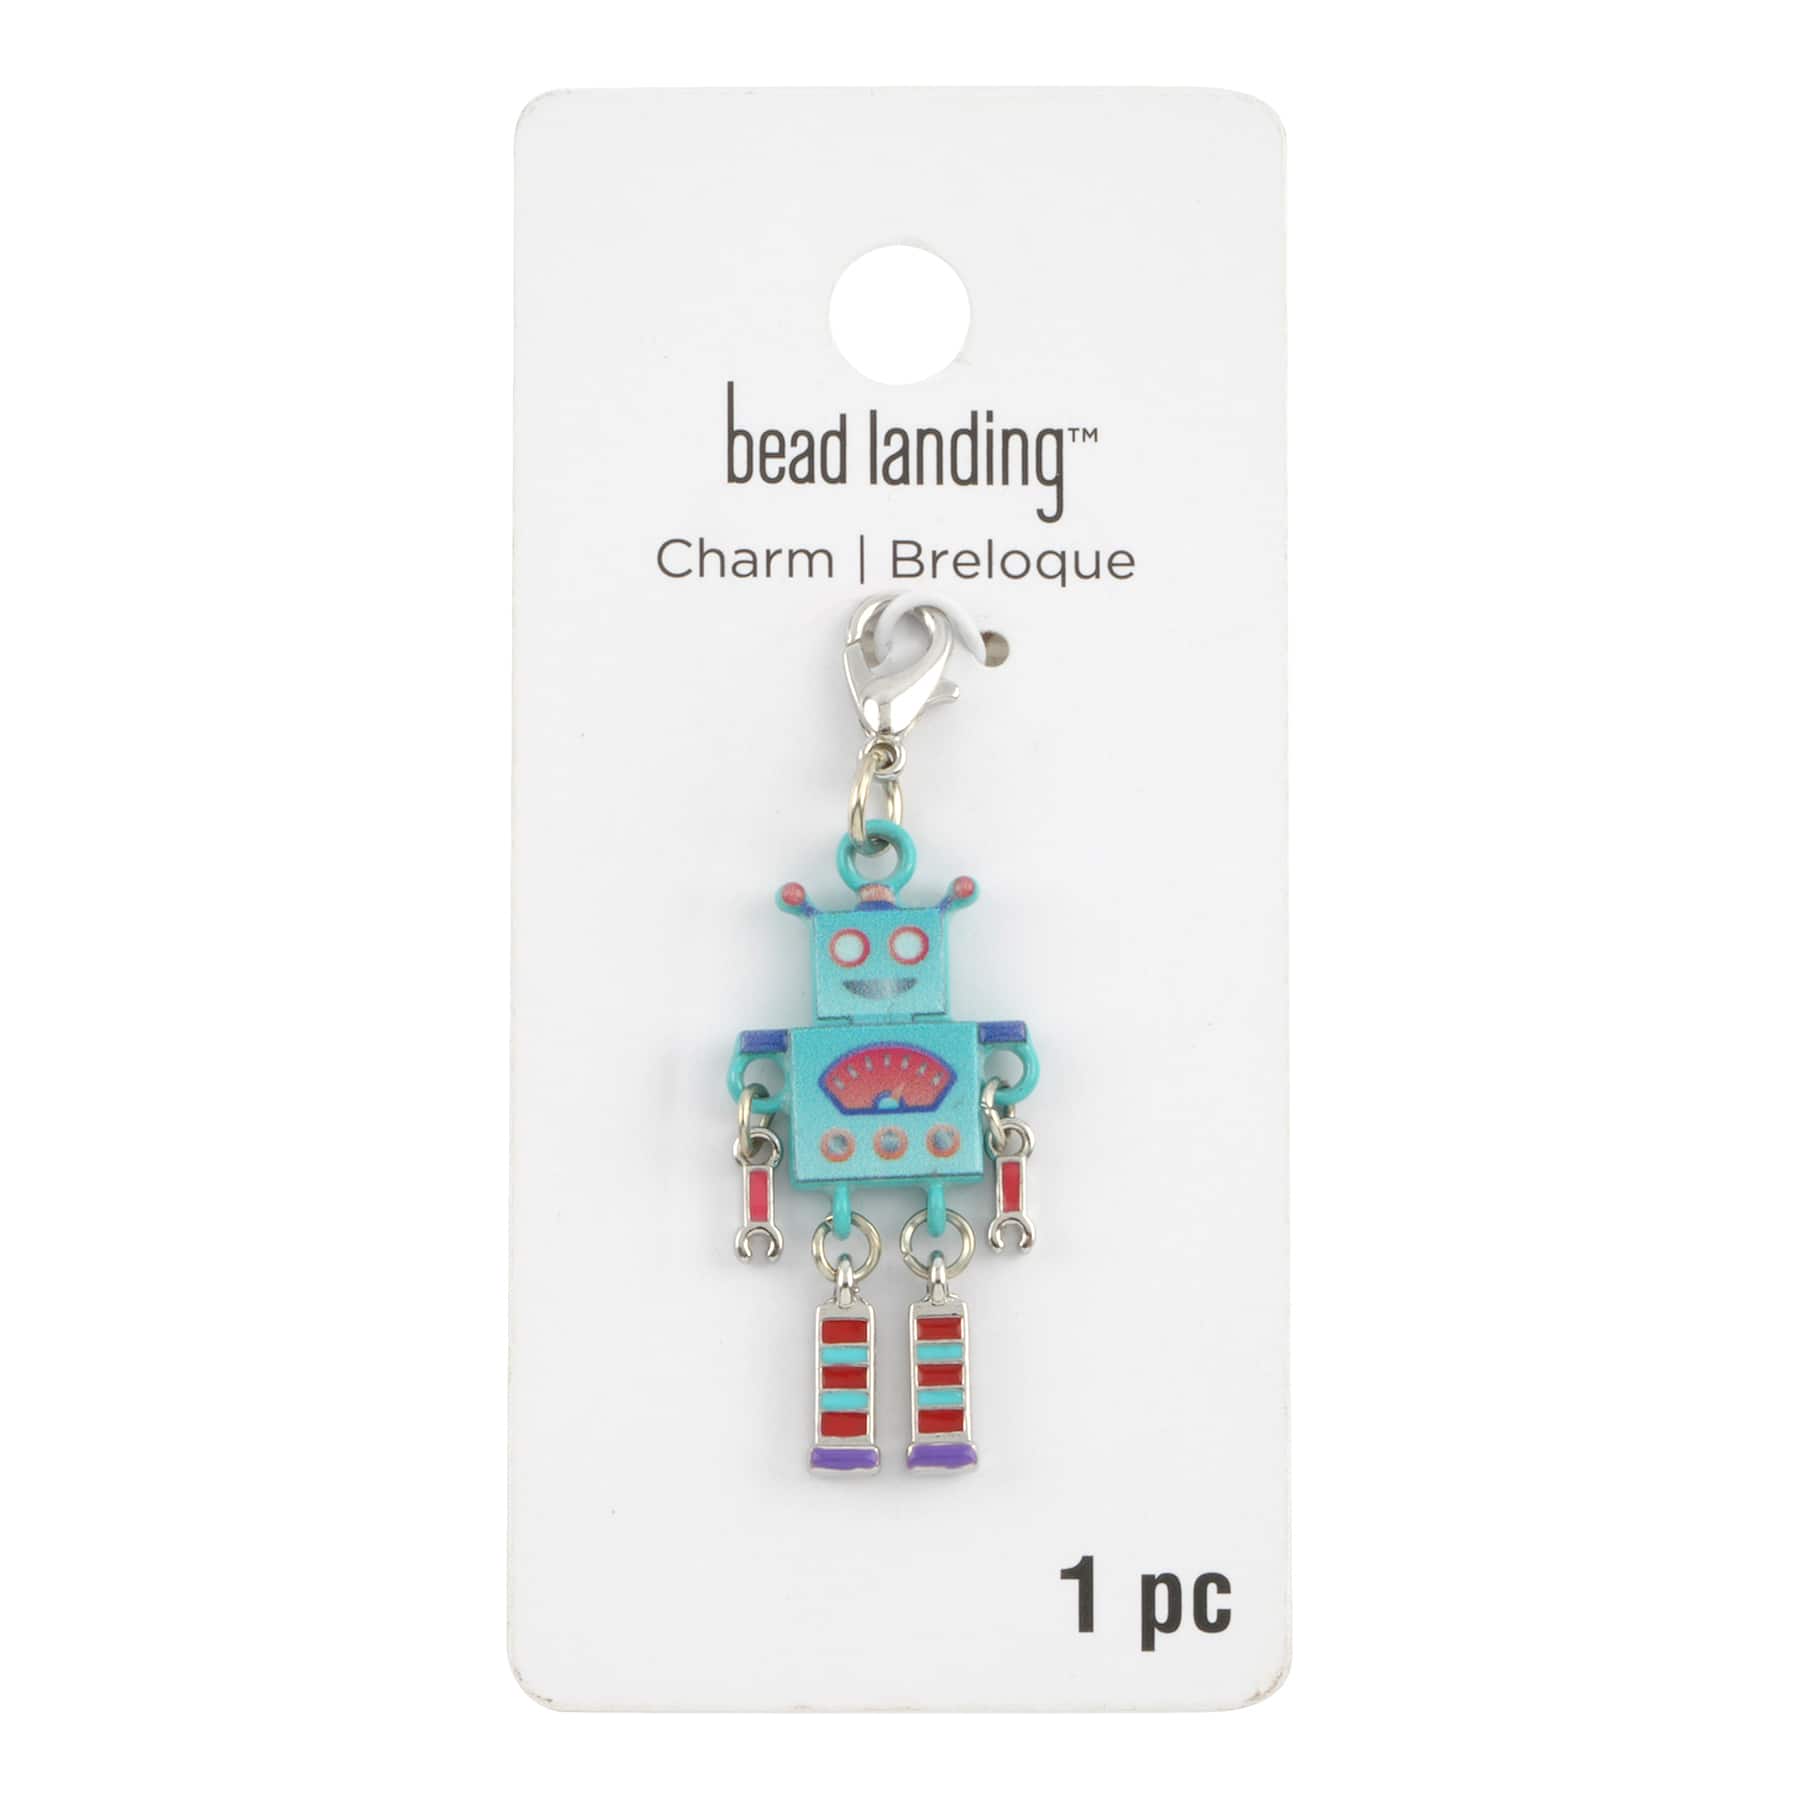 Blue Robot Charm by Bead Landing&#x2122;